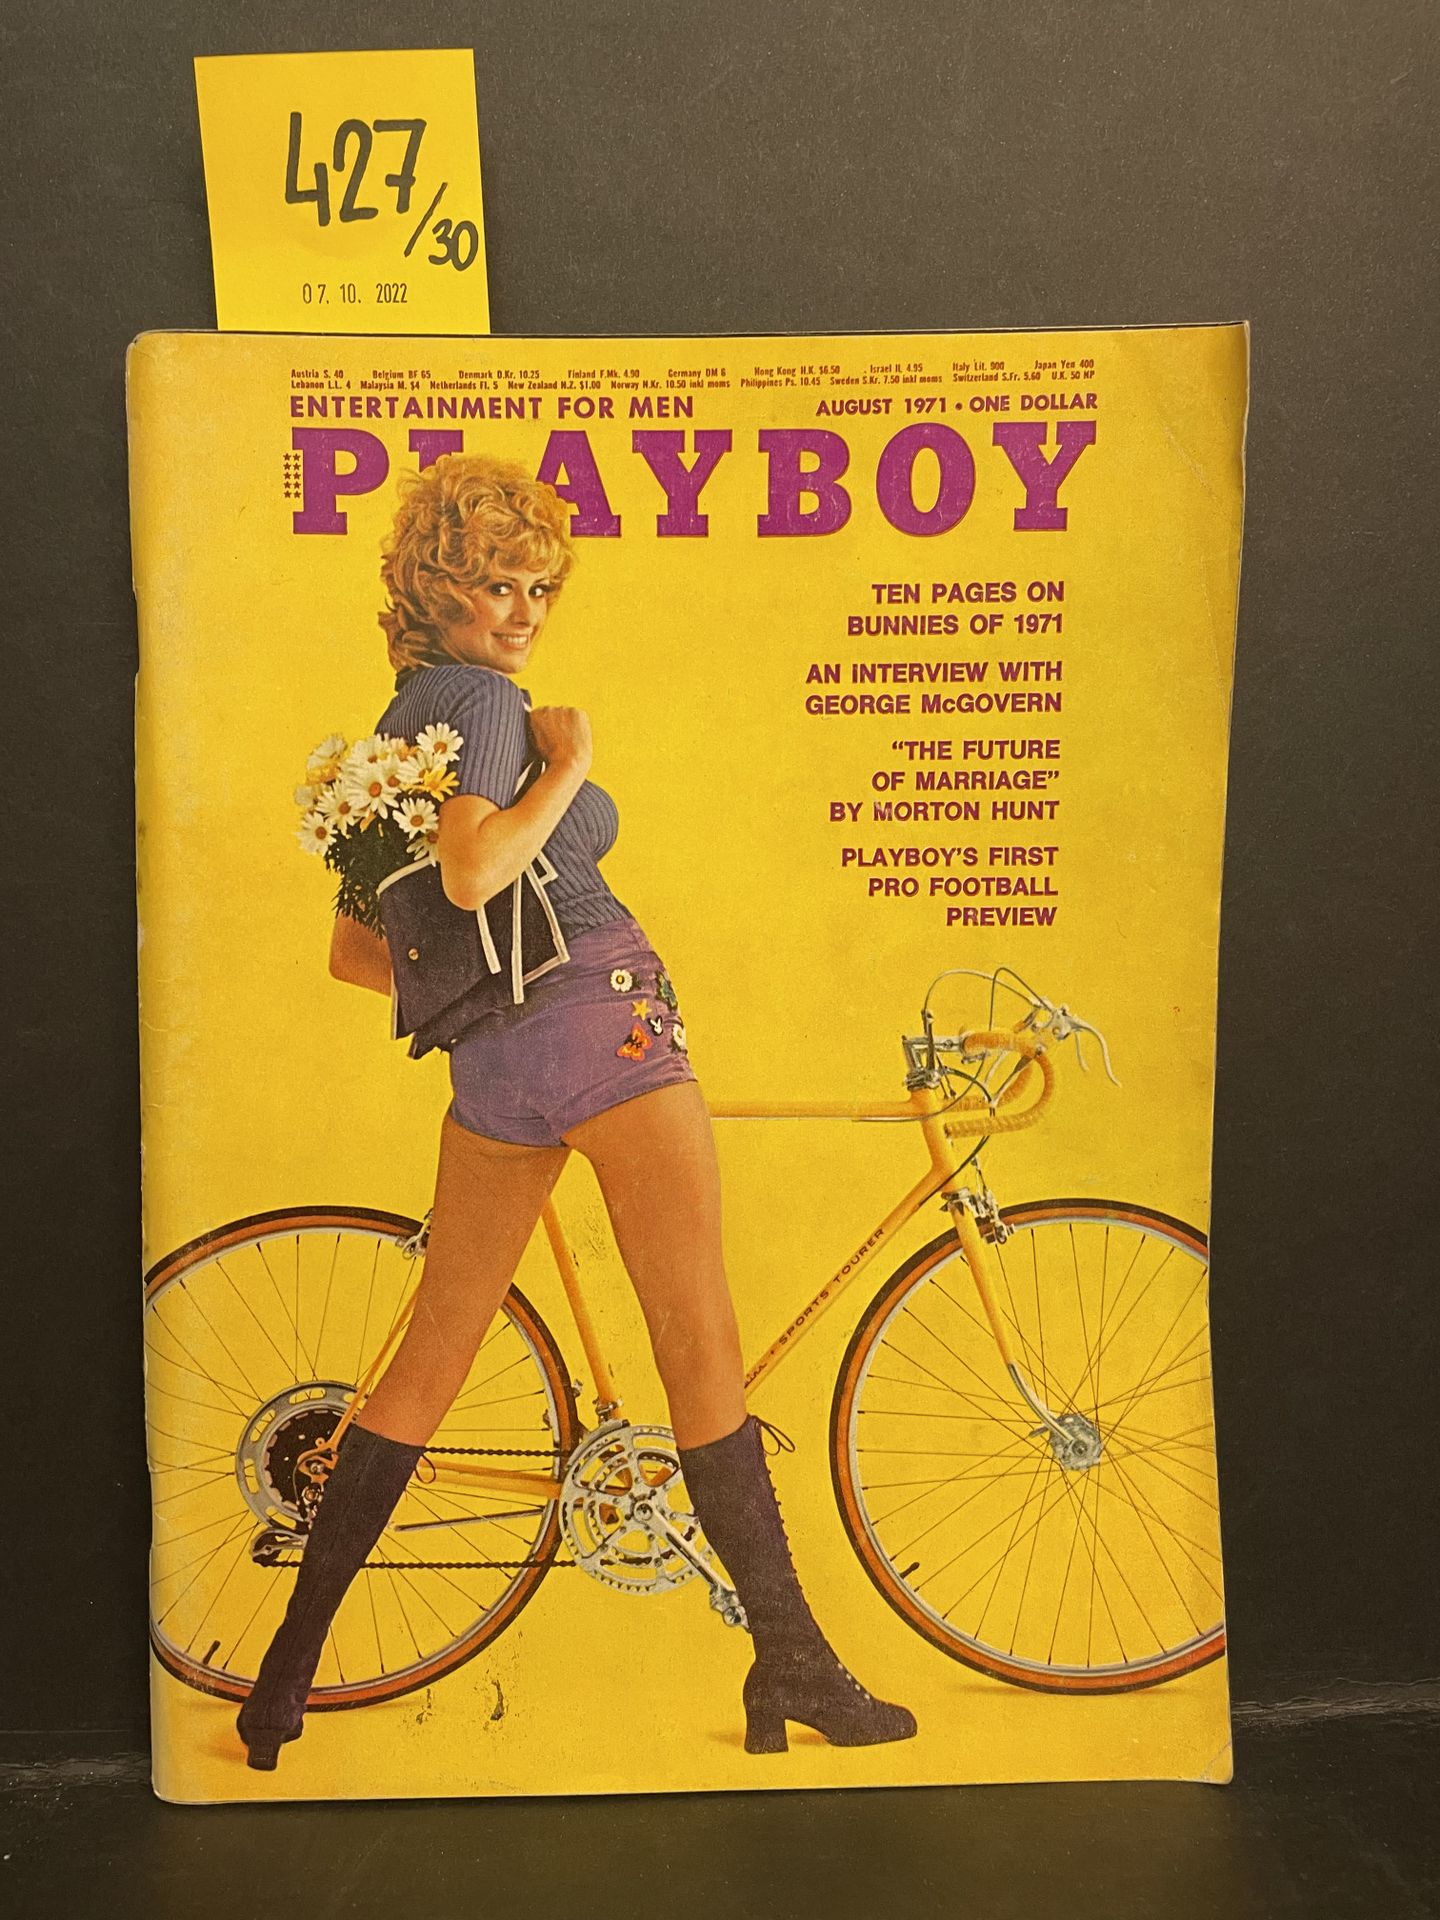 Null "Playboy". Entertainment for Men. Chicago, 1959-1980, 30 vol. 4°, agrafé (q&hellip;